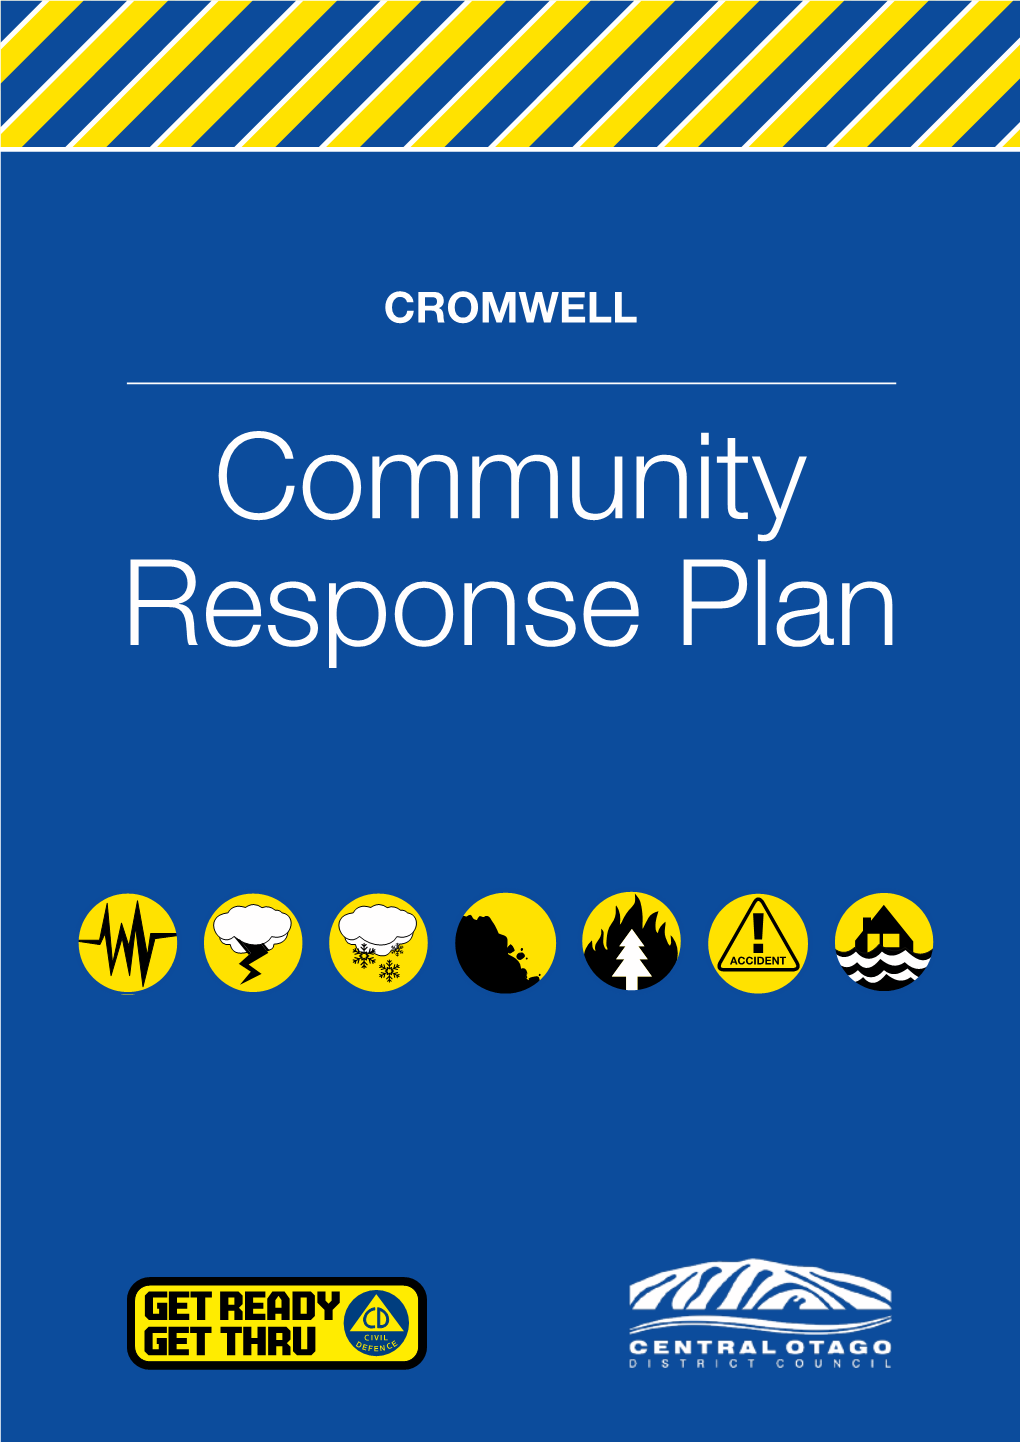 CROMWELL Community Response Plan Contents